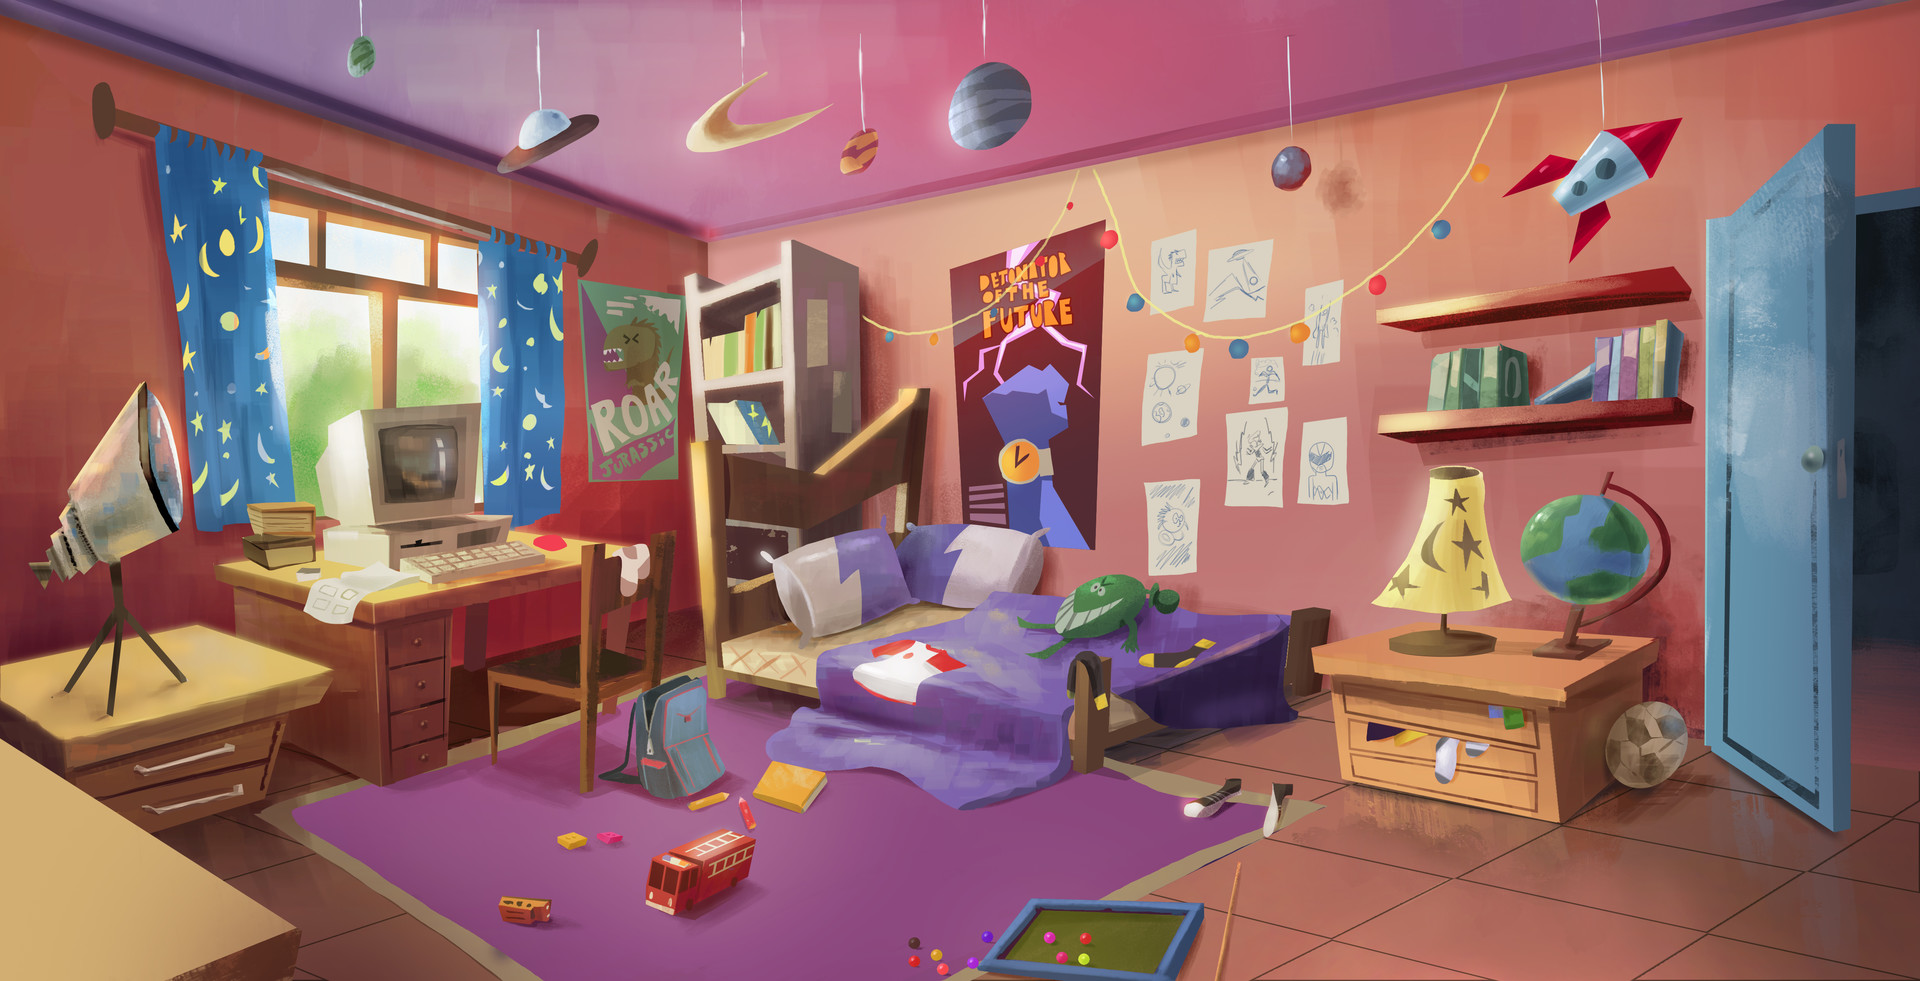 Astronaut bedroom by Everton Caetano